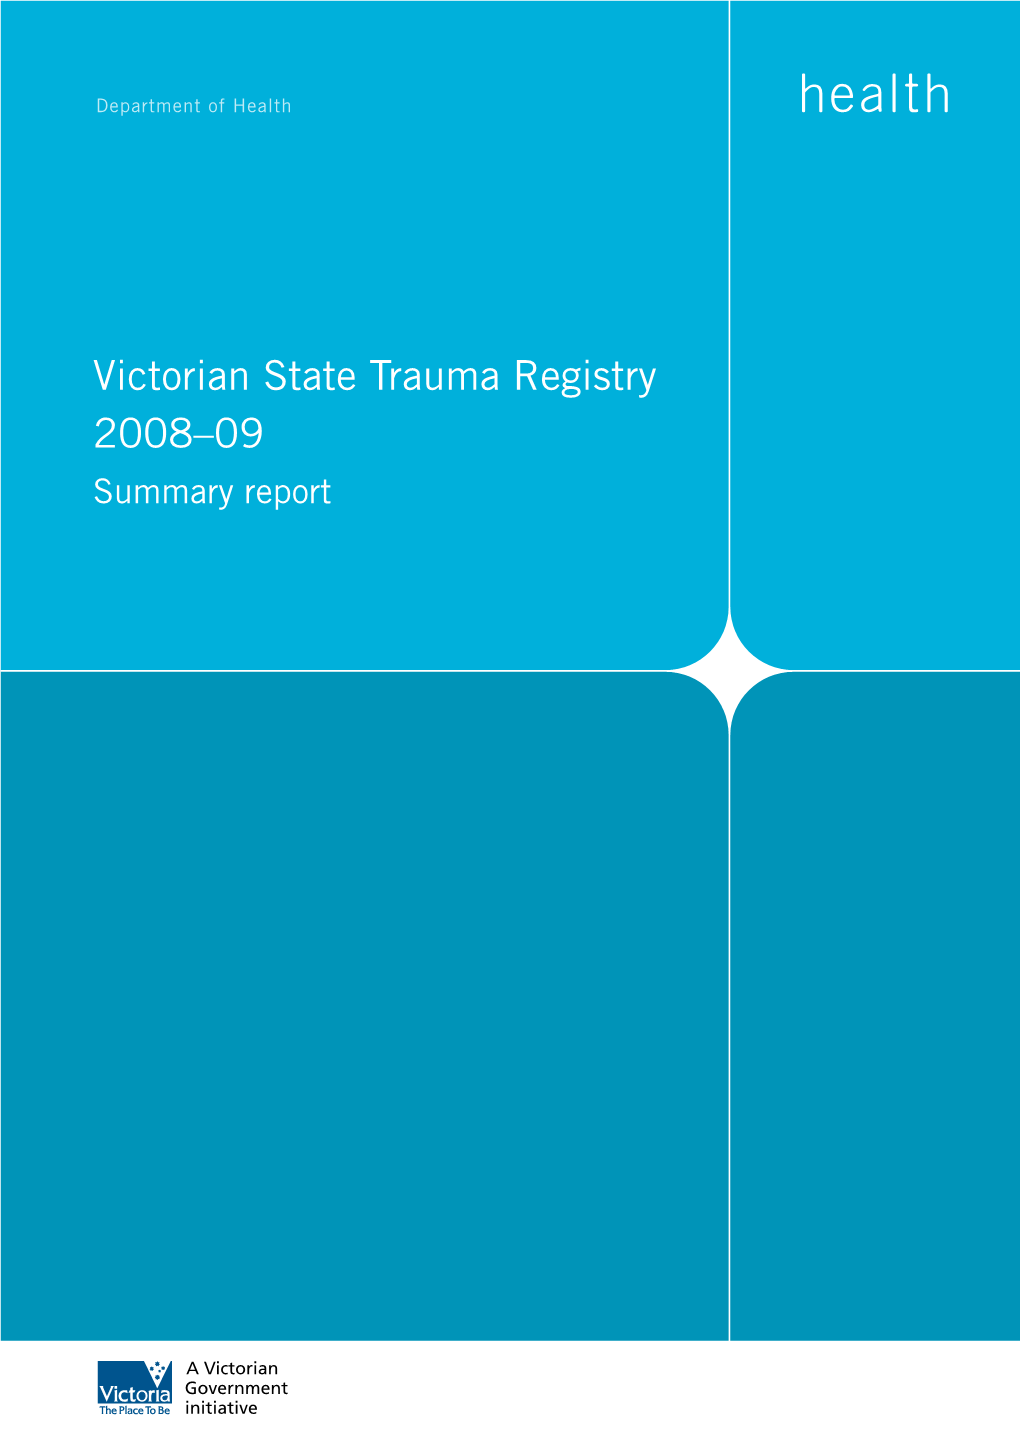 Victorian State Trauma Registry, 2008-09: Summary Report